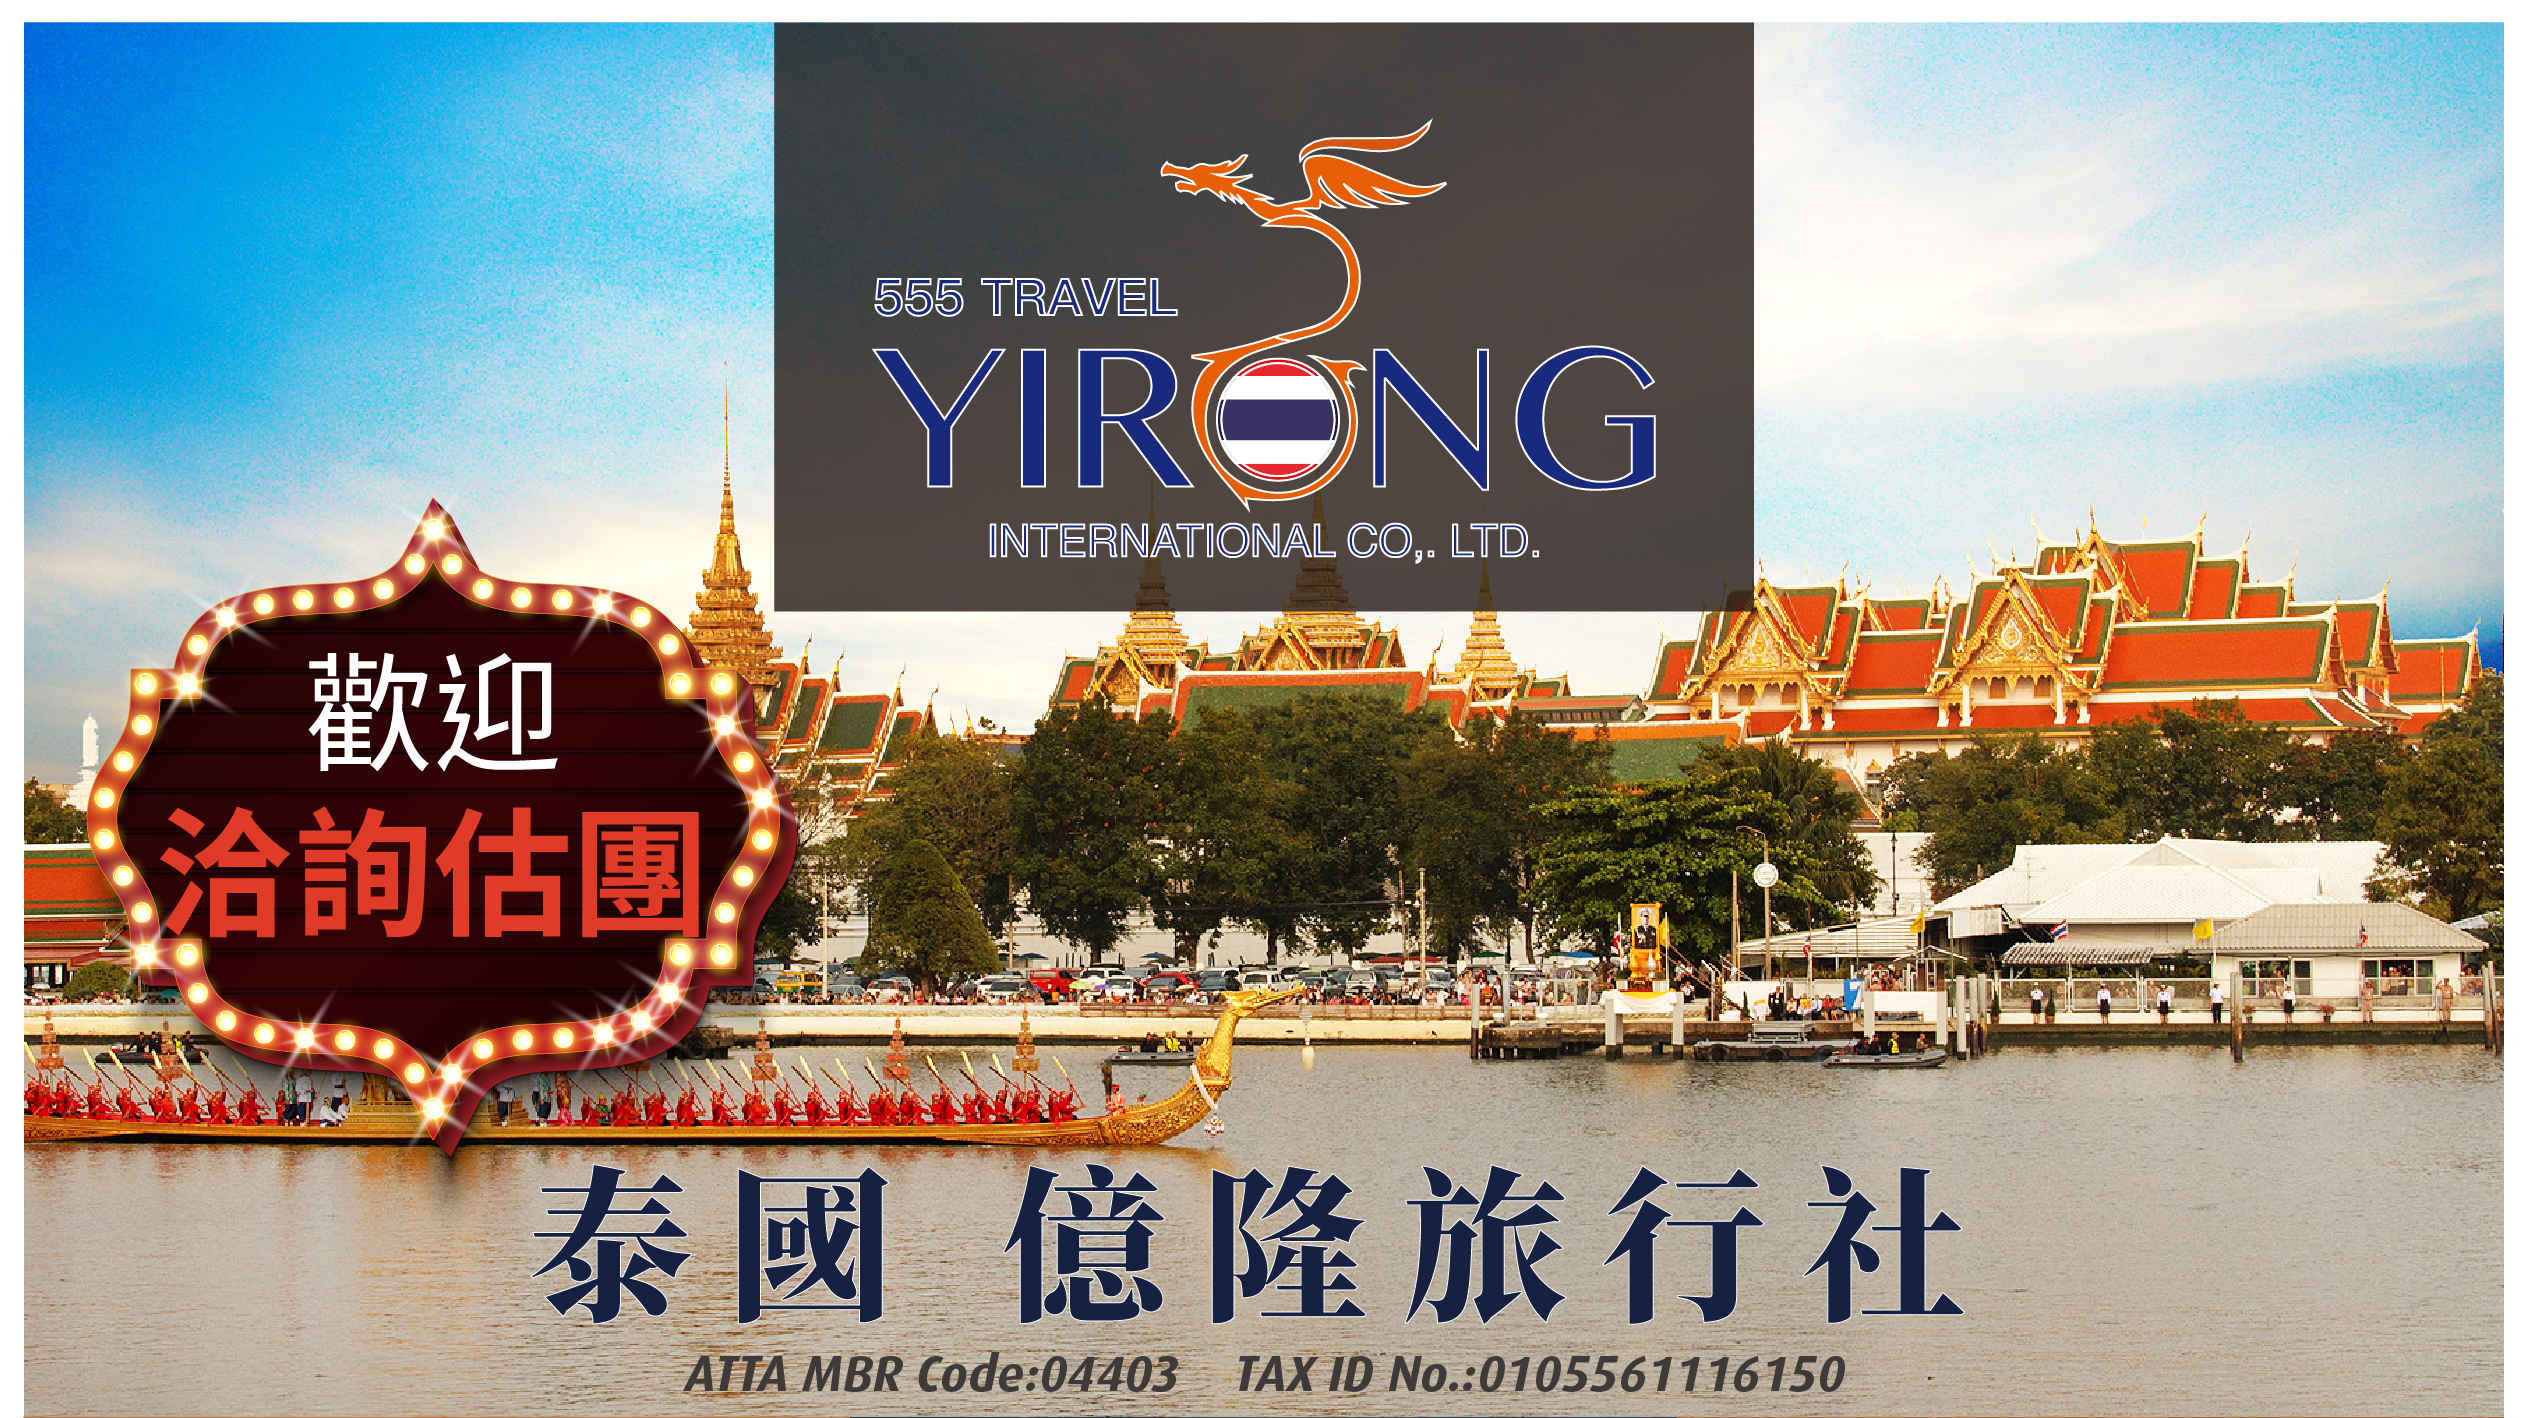 Thailand Groud Tour Agency-Yirong Travel International Co., Ltd.